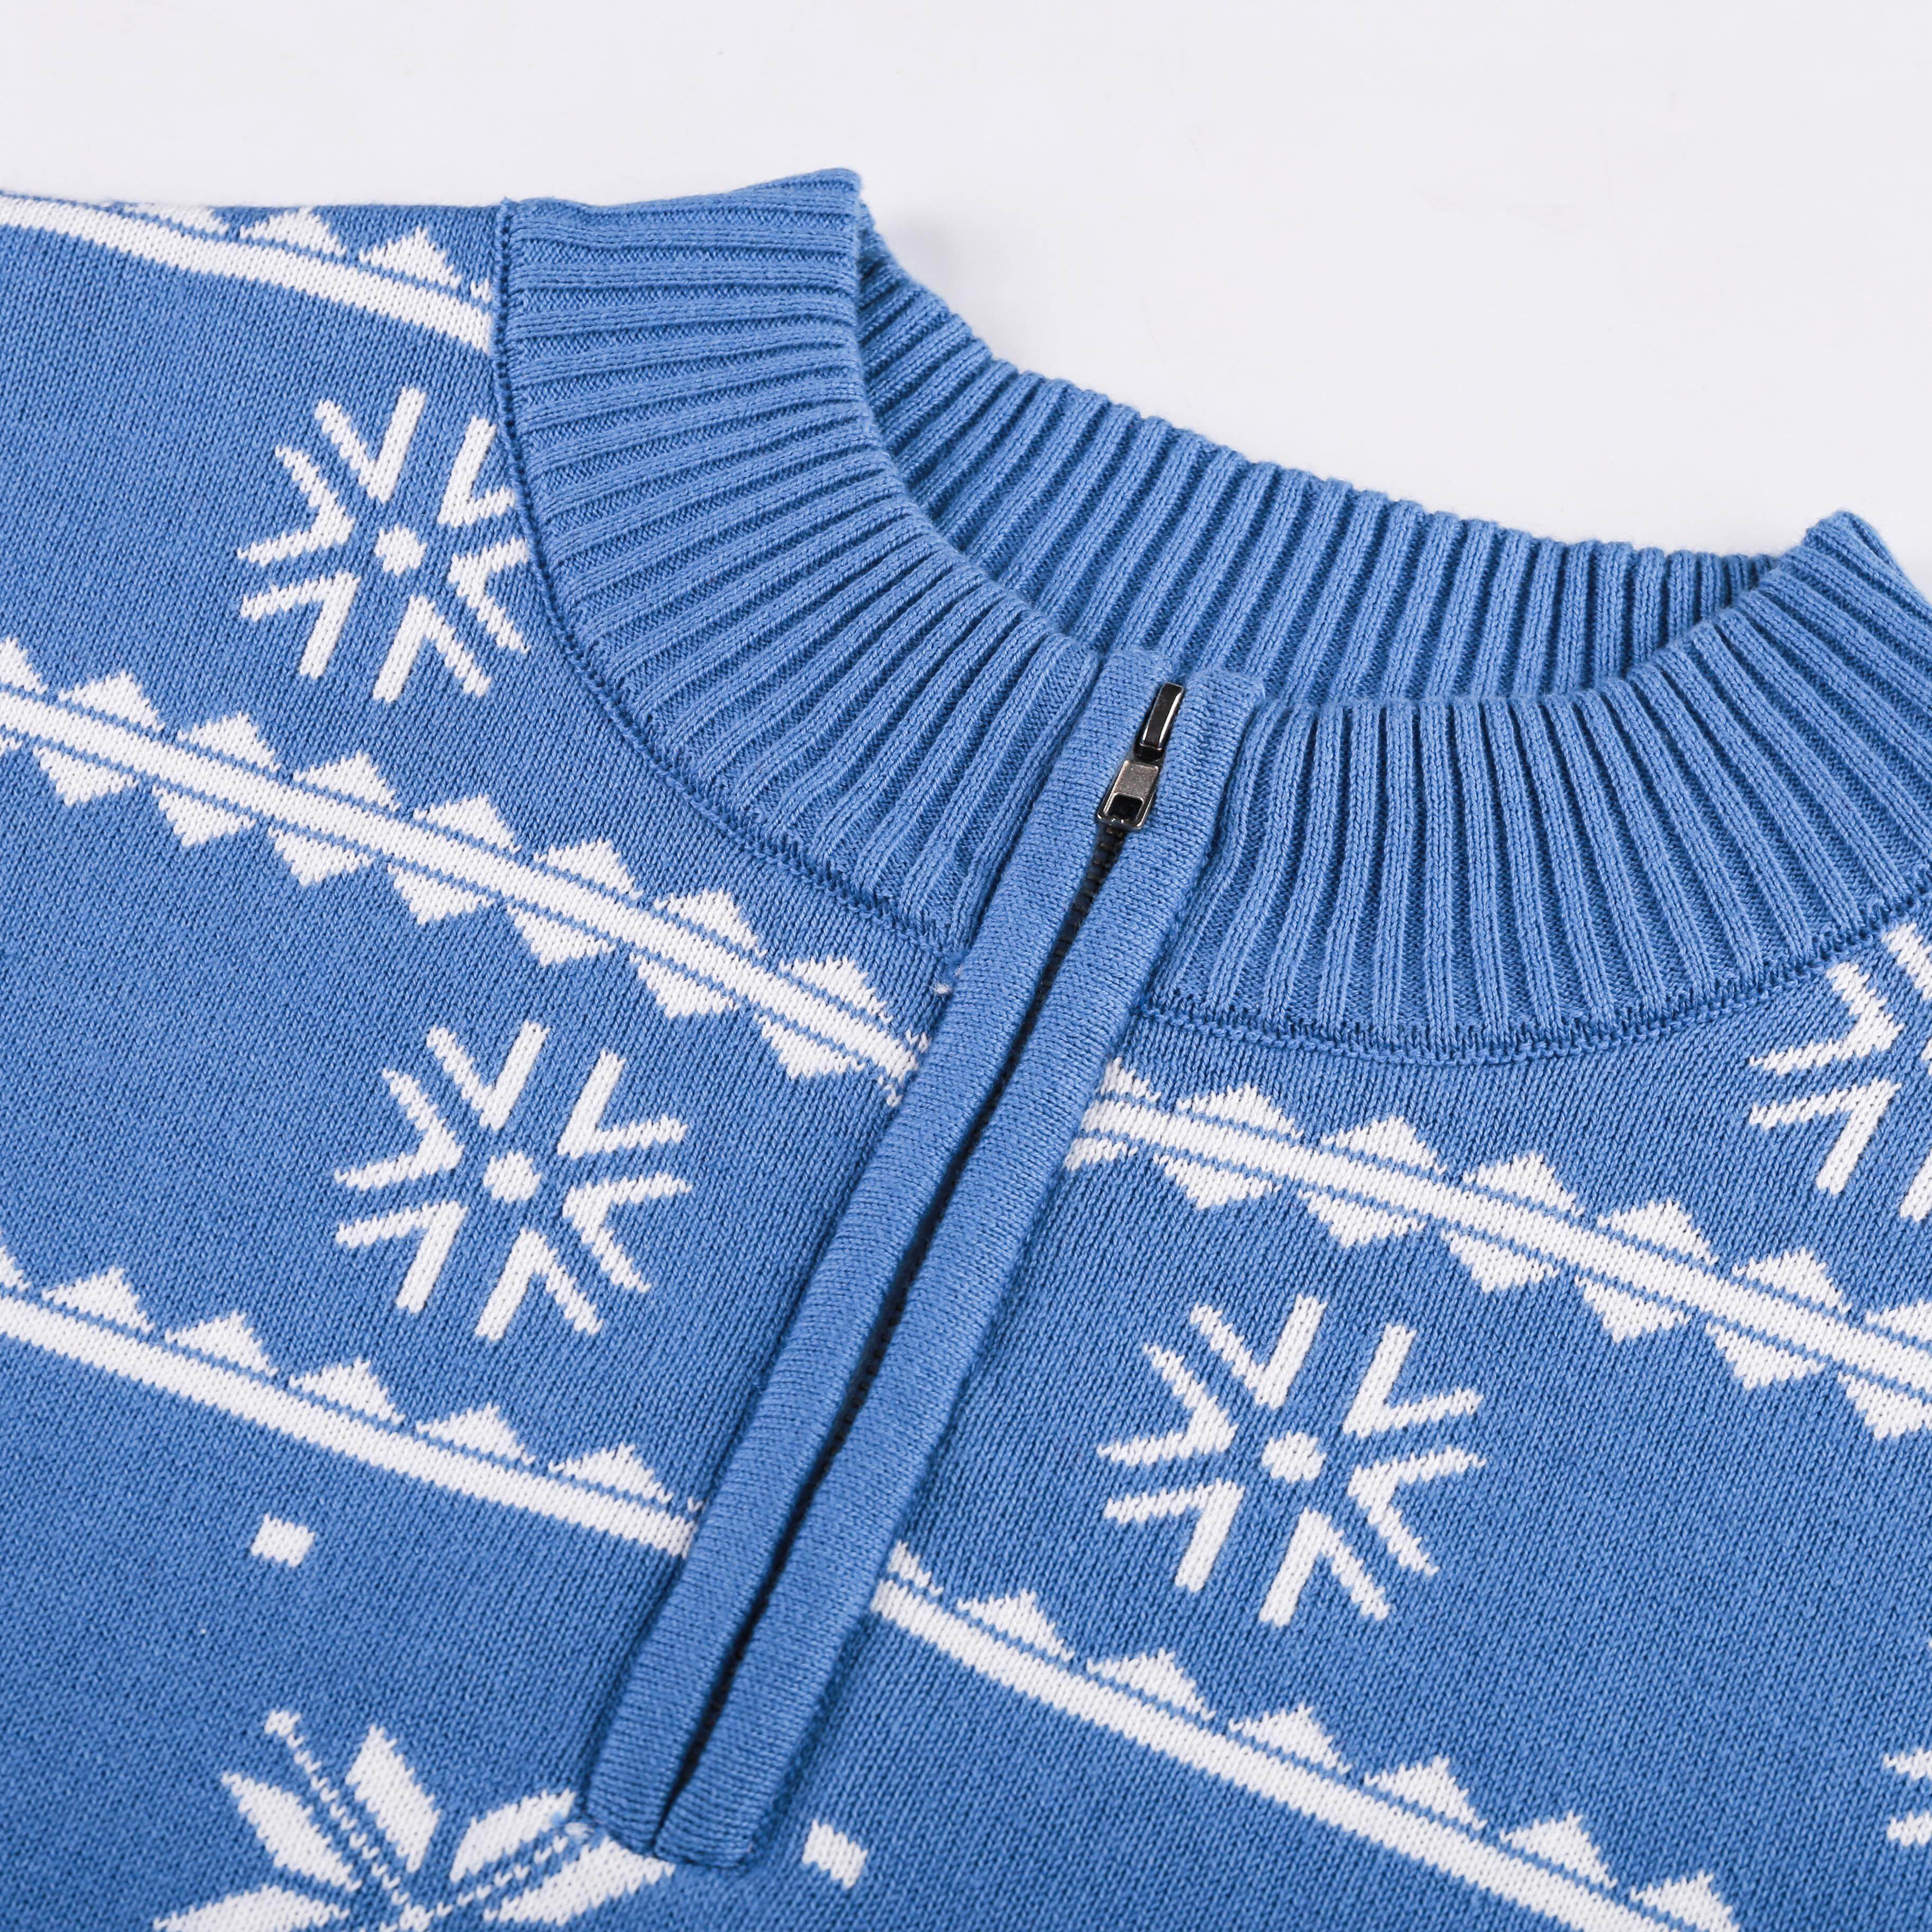 Christmas Sweater,  Cardigan Sweater,  Custom Sweater,  Half Zipper